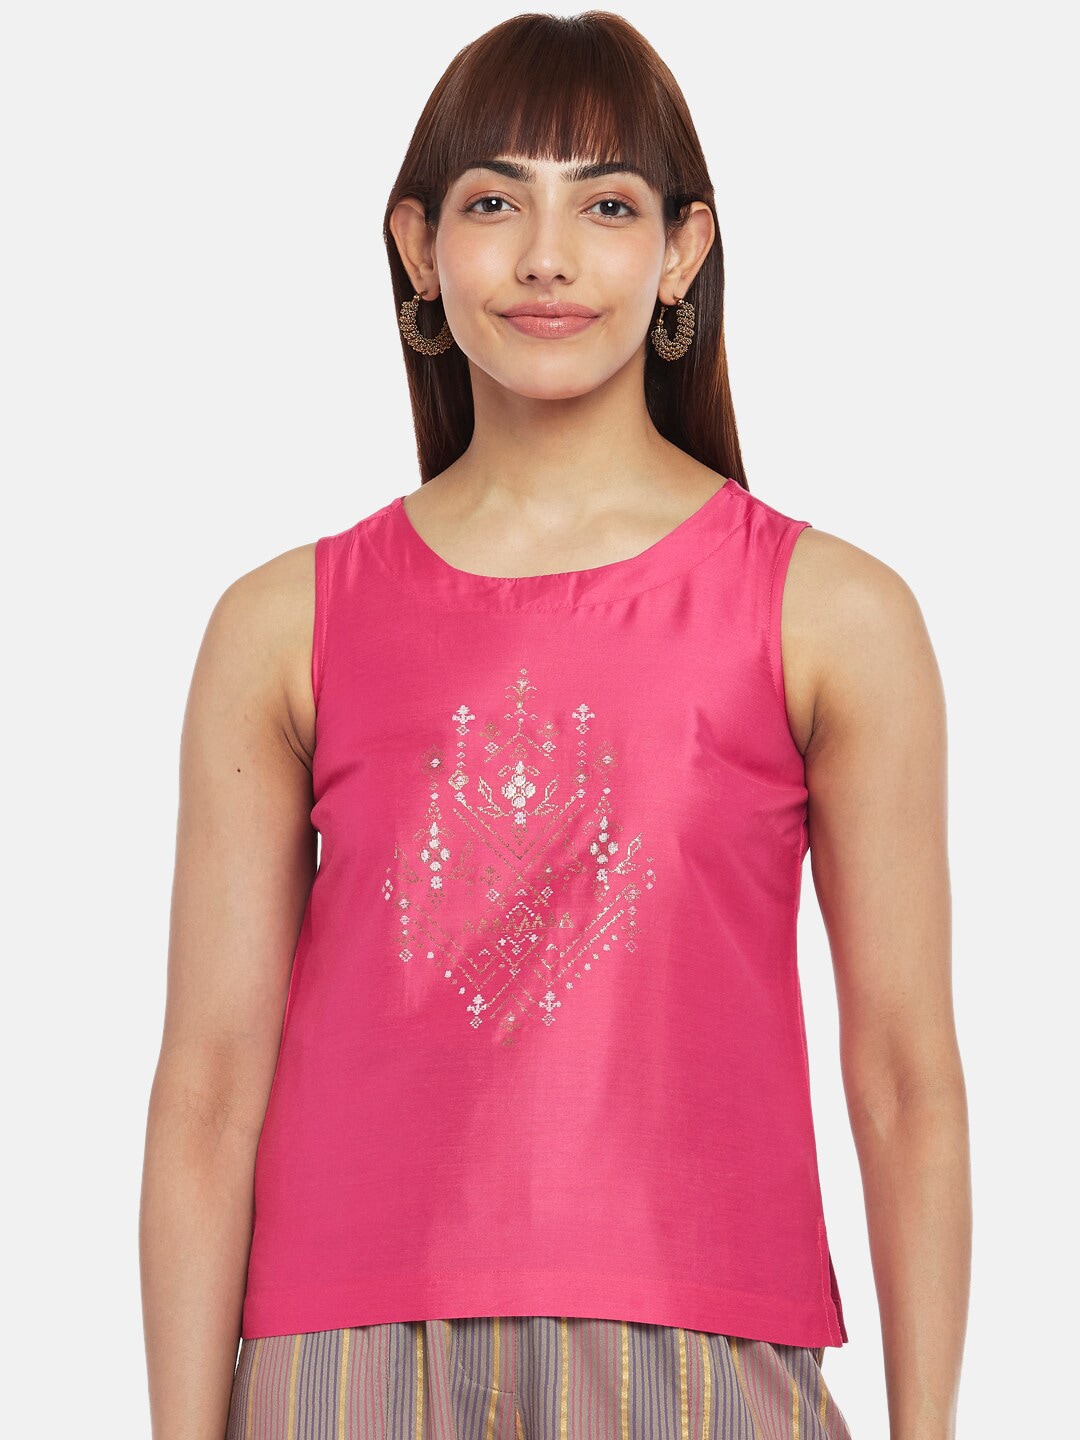 AKKRITI BY PANTALOONS women Pink & White Printed Top Price in India